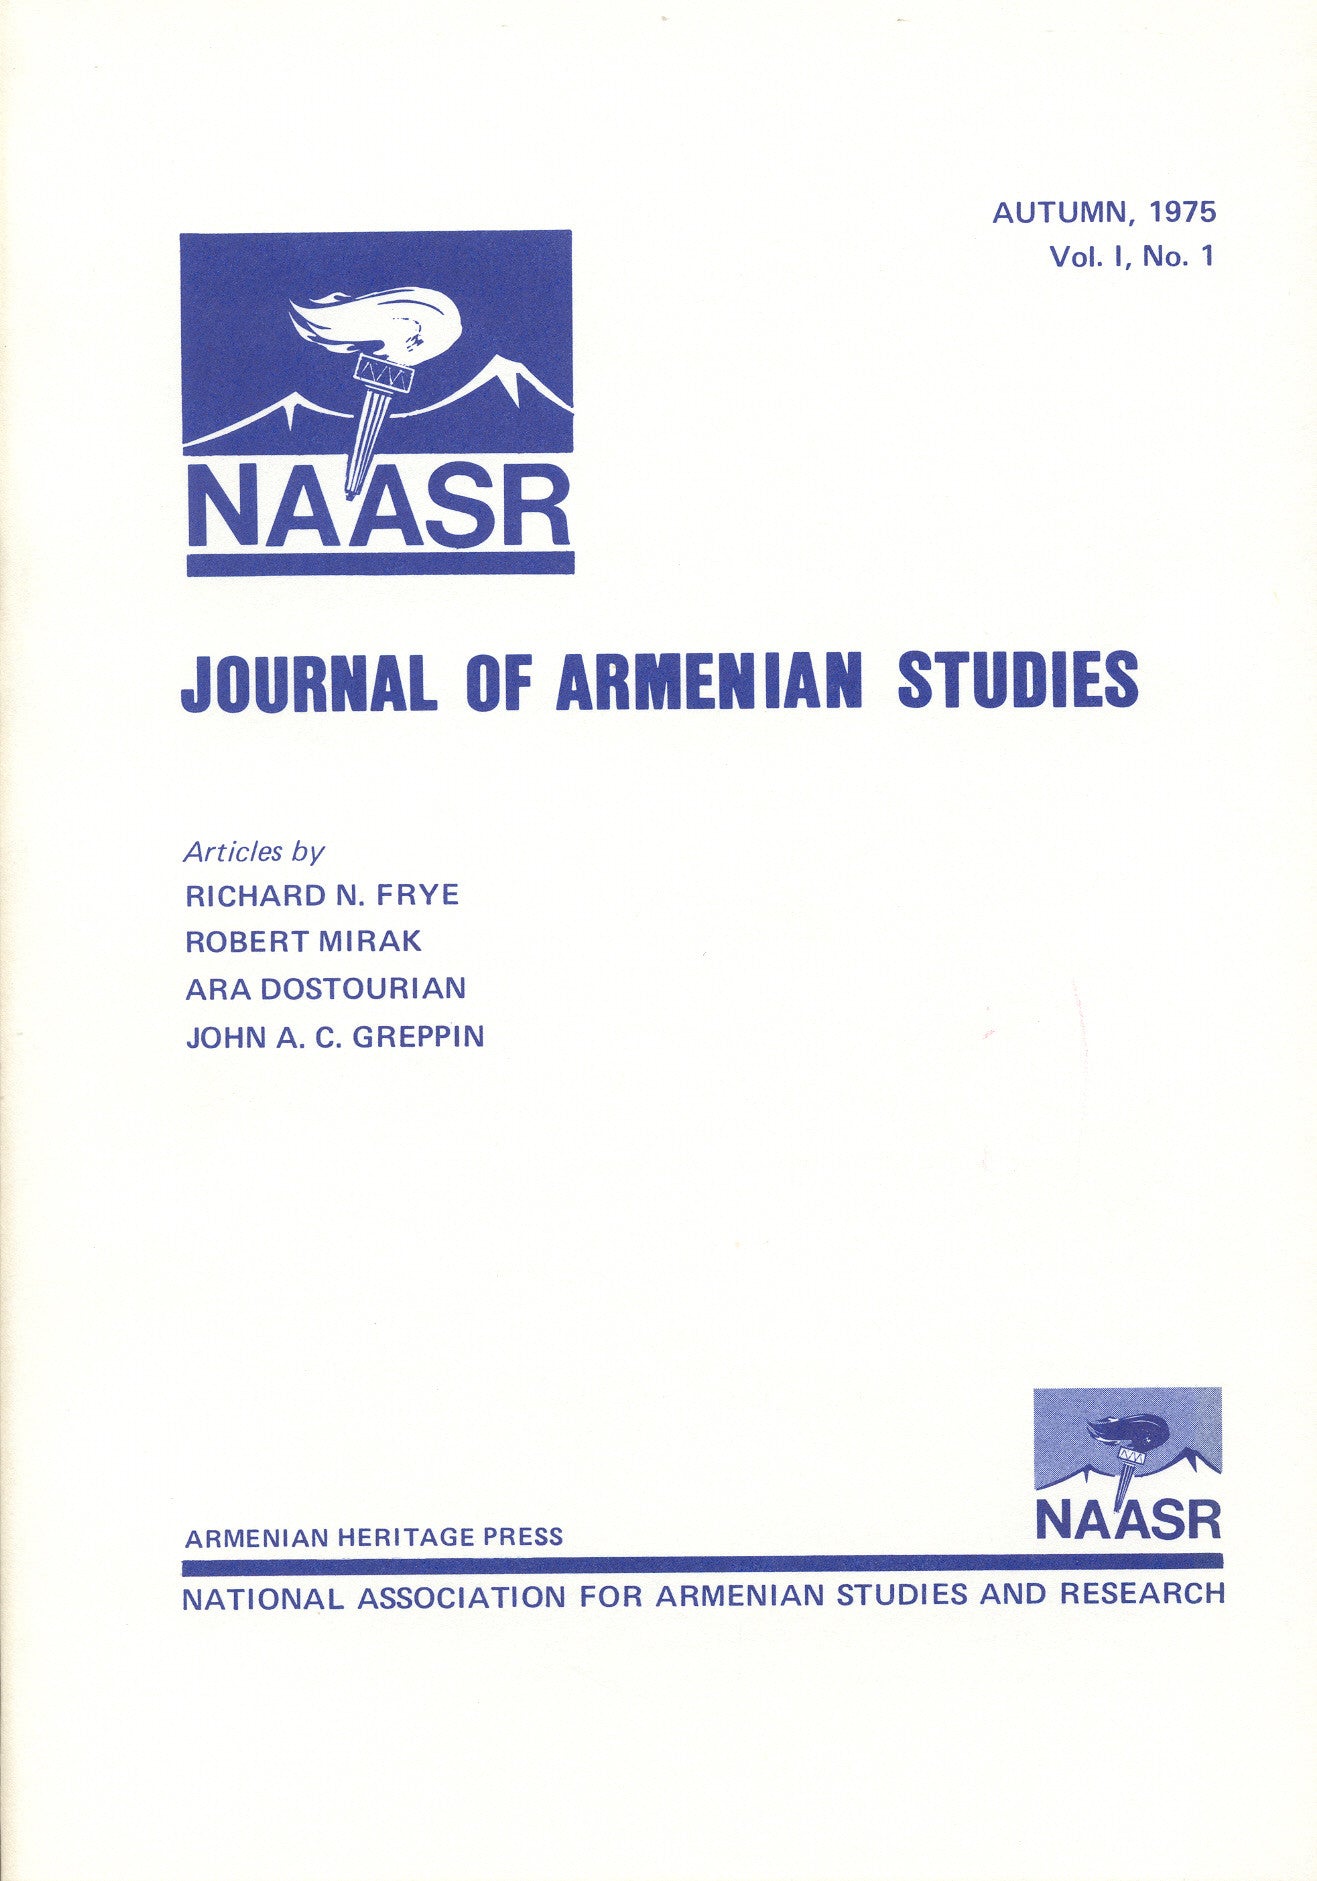 JOURNAL OF ARMENIAN STUDIES: Volume I, Number 1: Autumn 1975